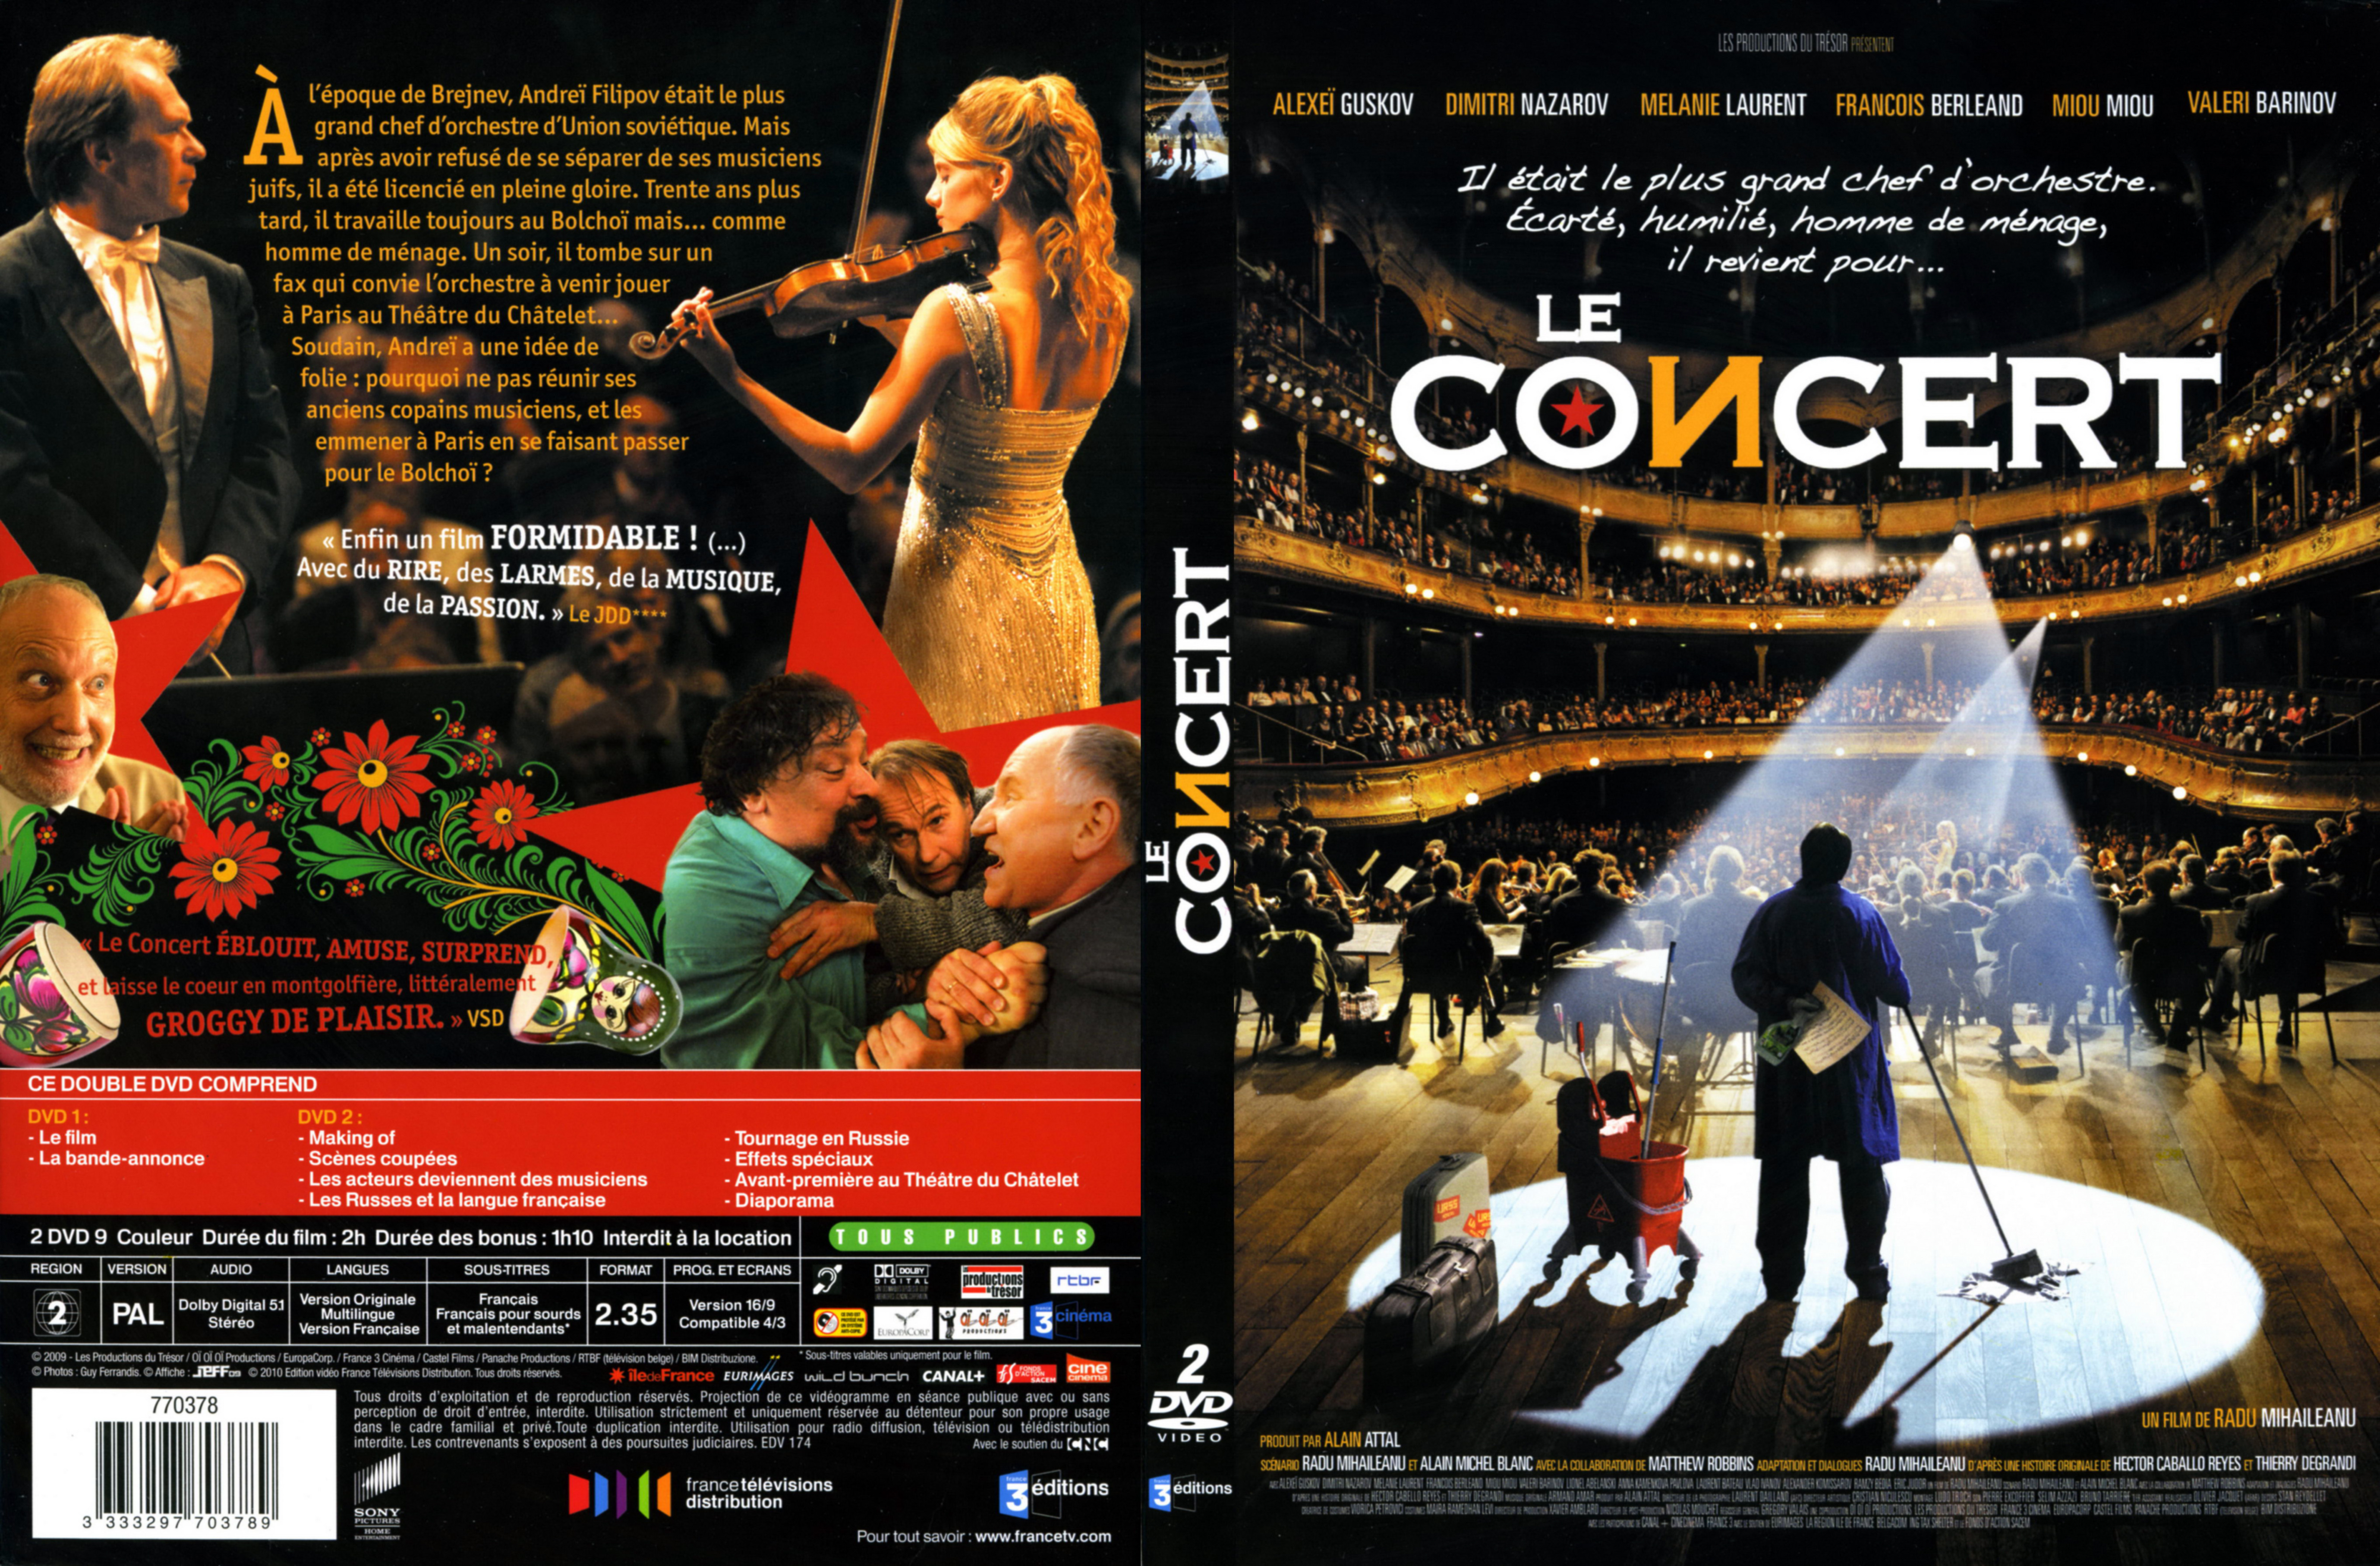 Jaquette DVD Le concert v2